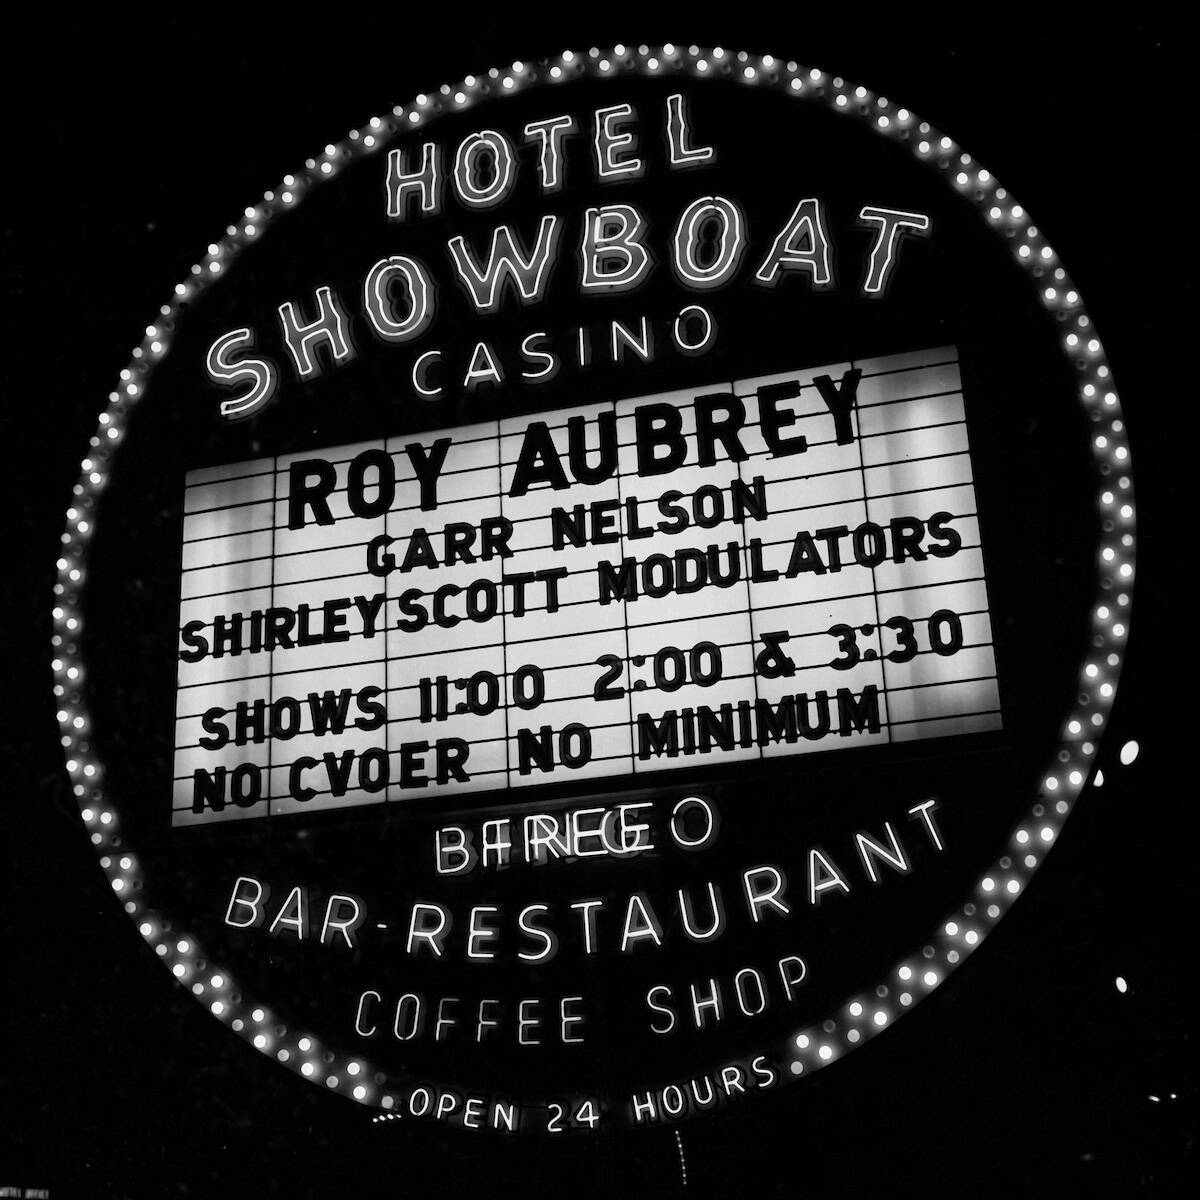 Roy Aubrey is the headliner at the Hotel Showboat Casino on Dec. 31, 1955. (Las Vegas News Bureau)